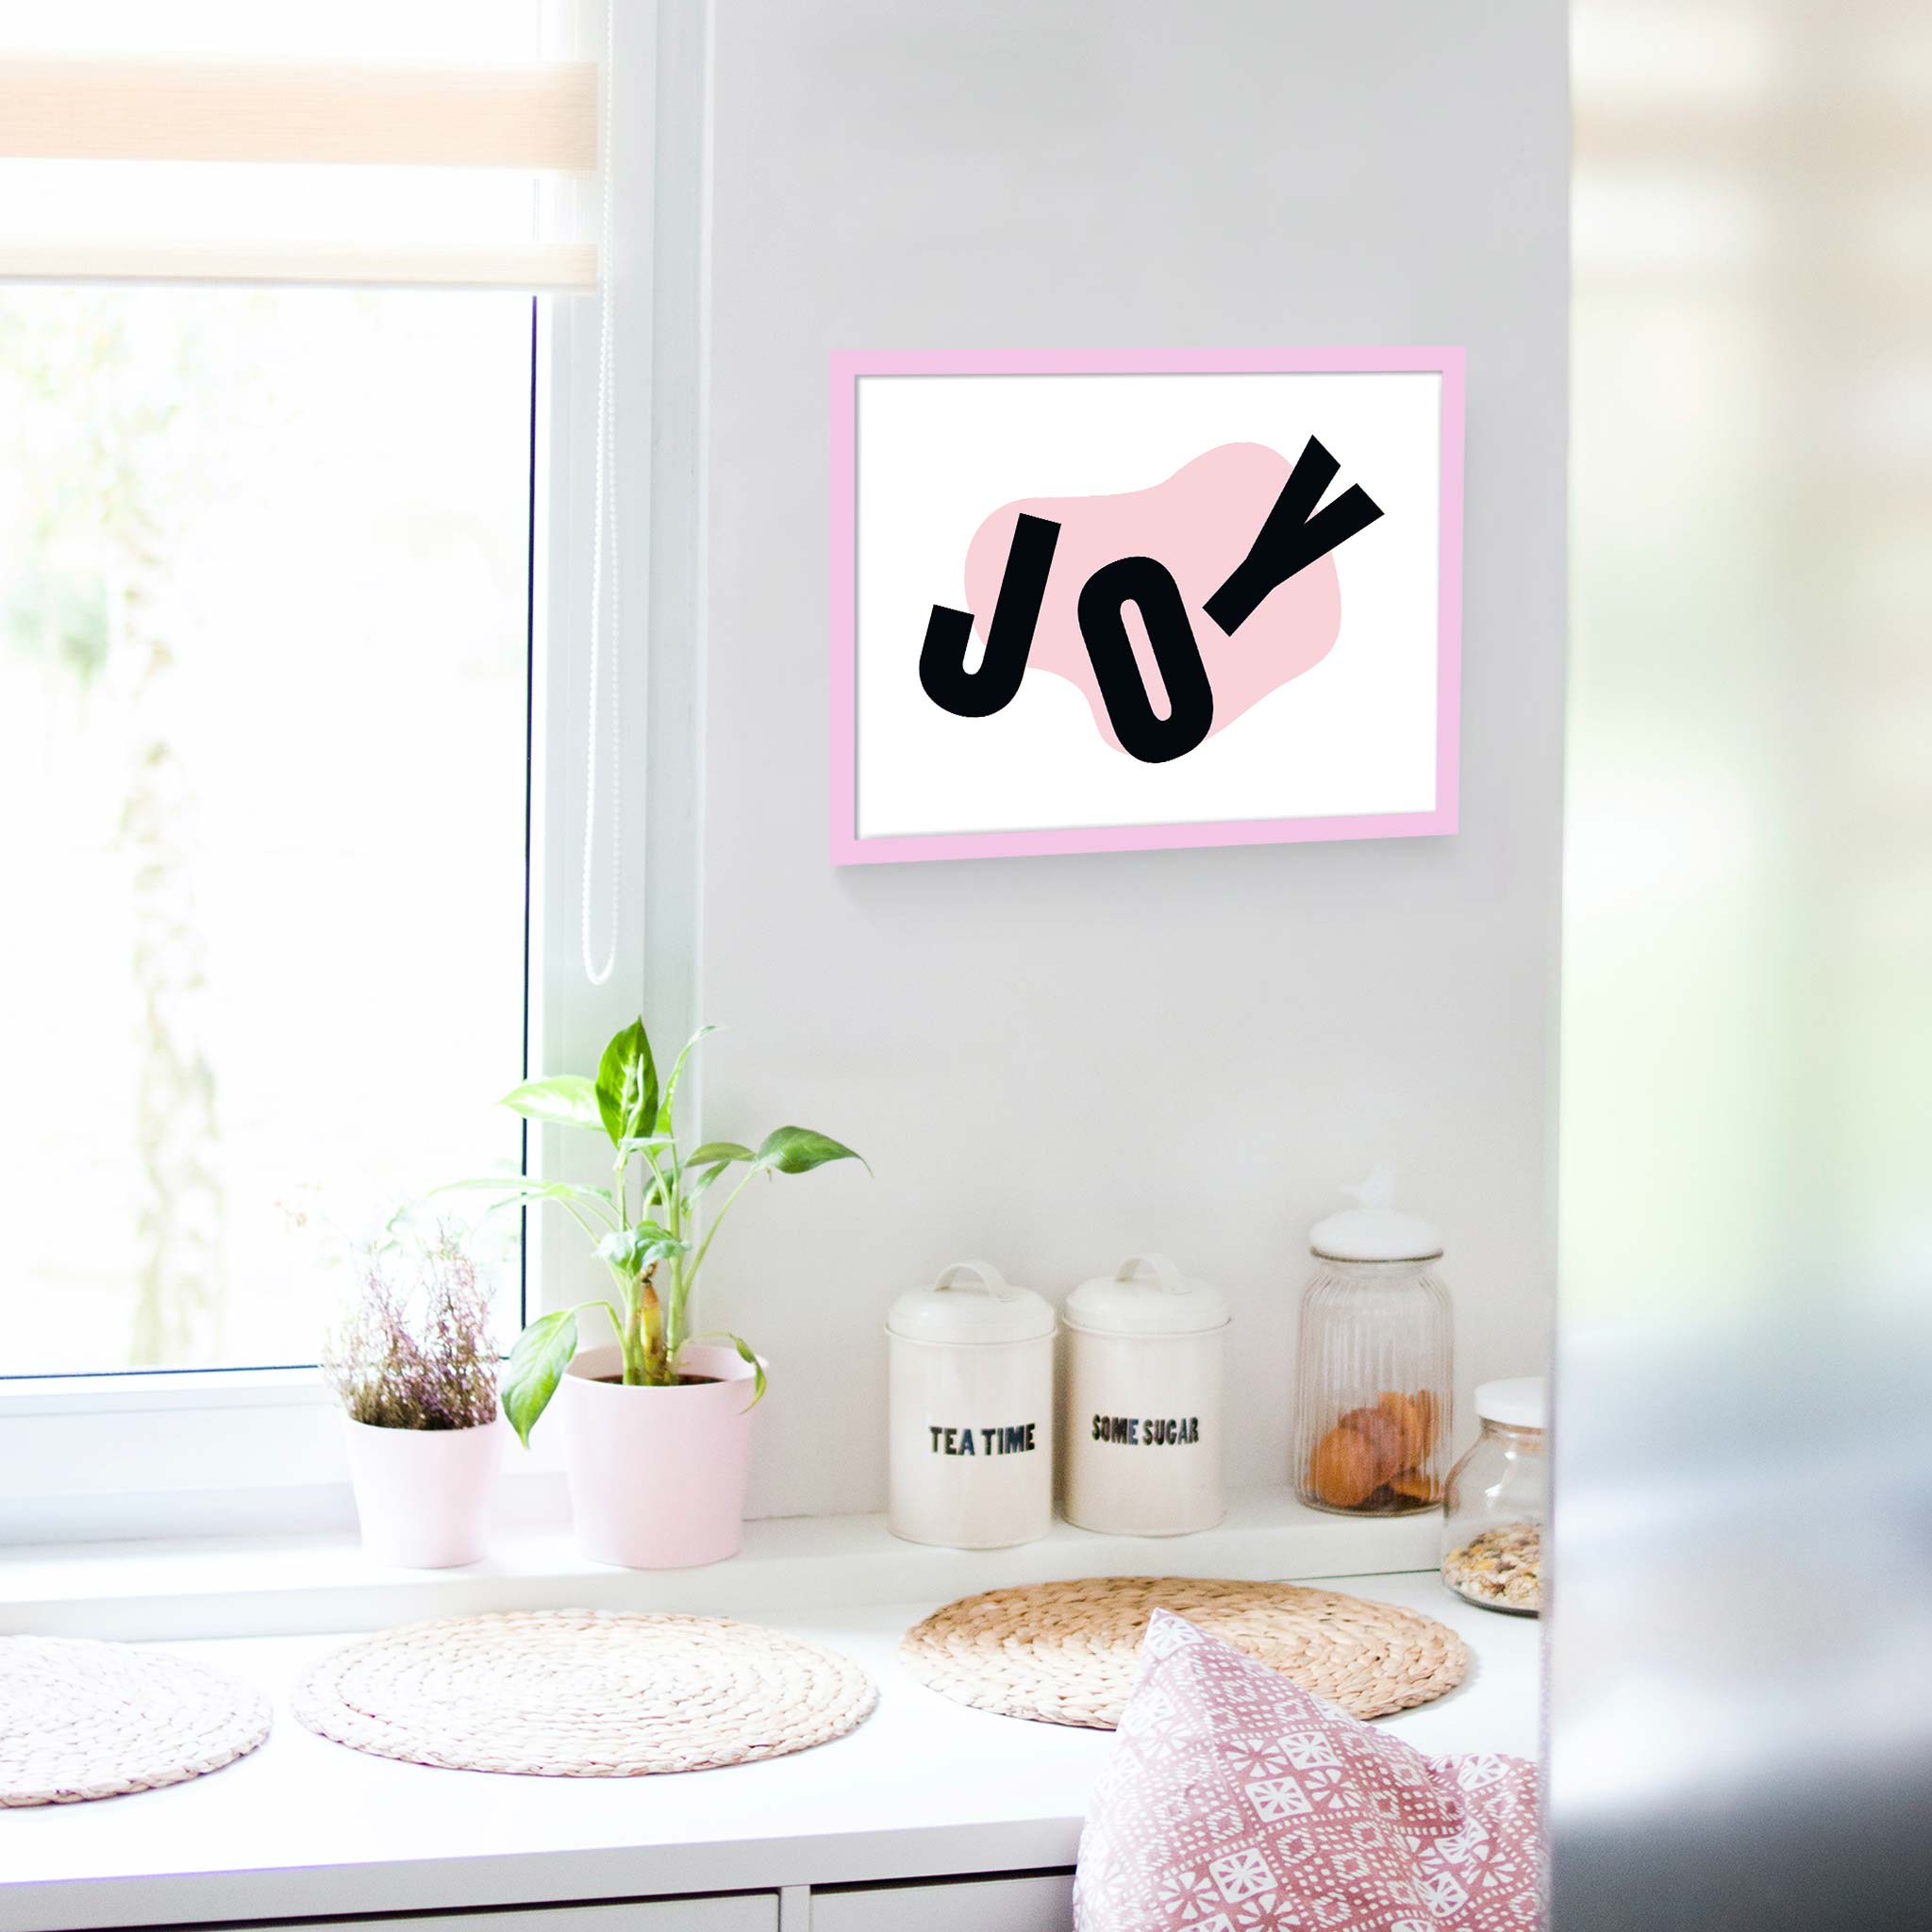 JOY (large letters spread across the canvas)